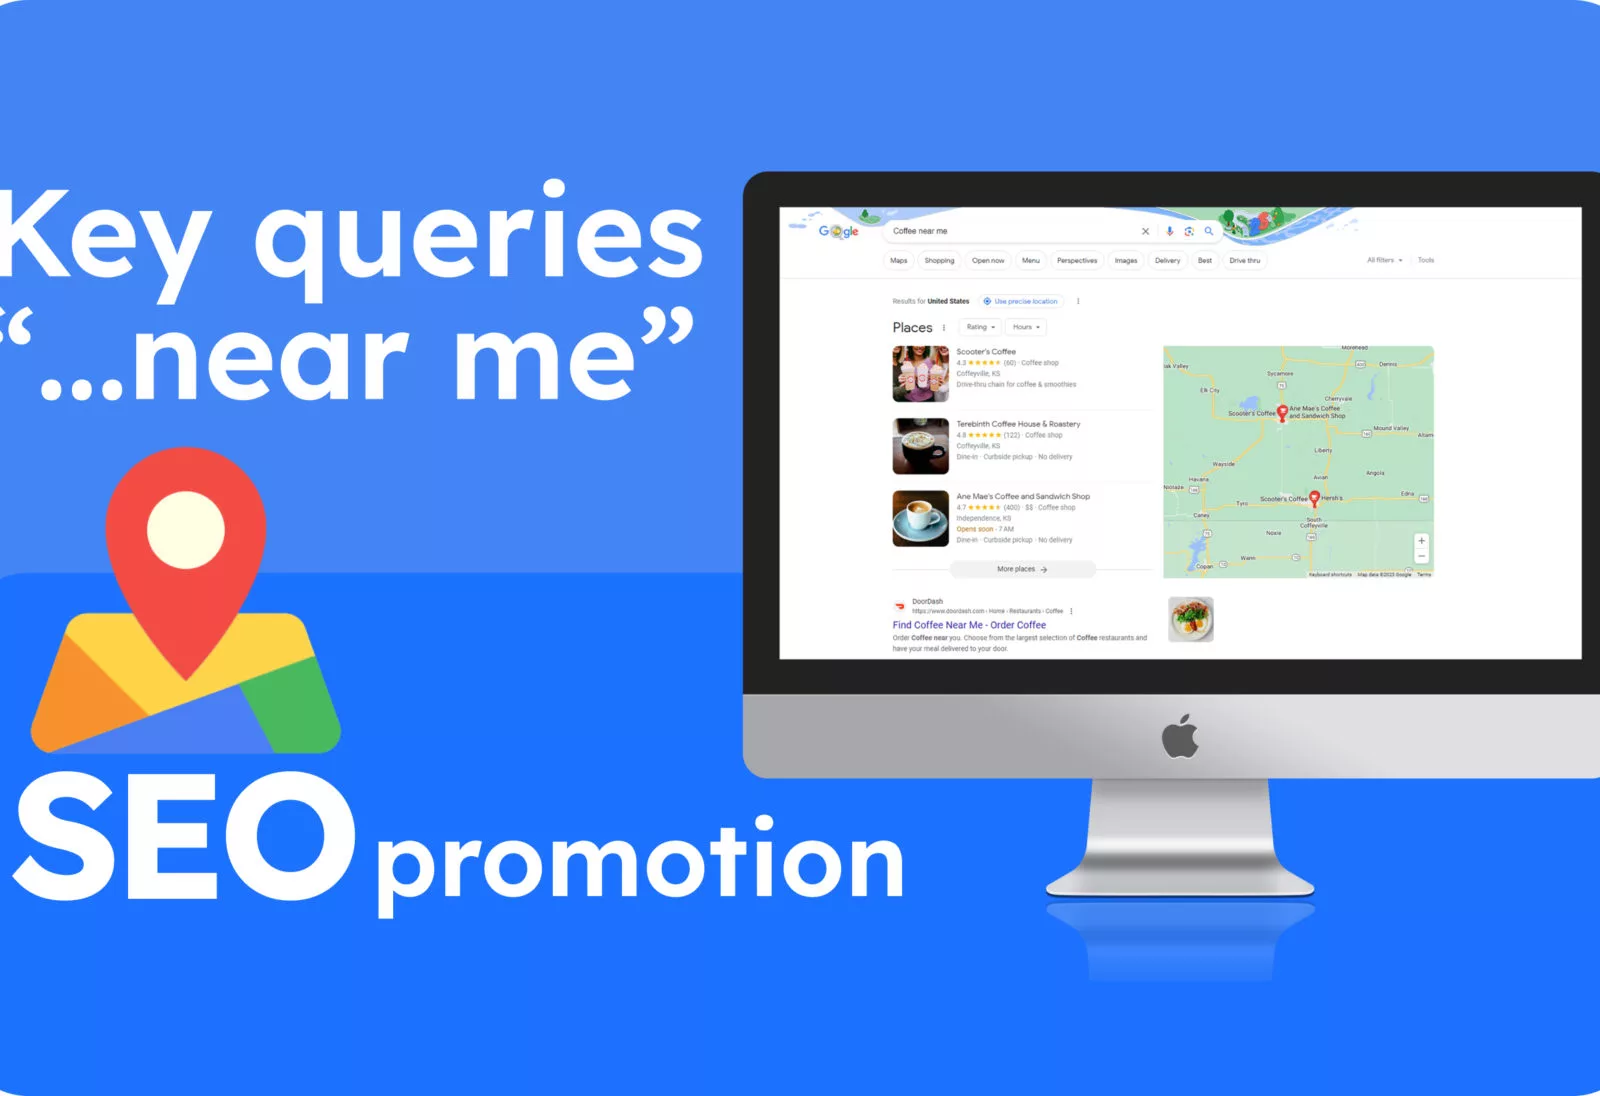 How to promote through key queries “… near me”